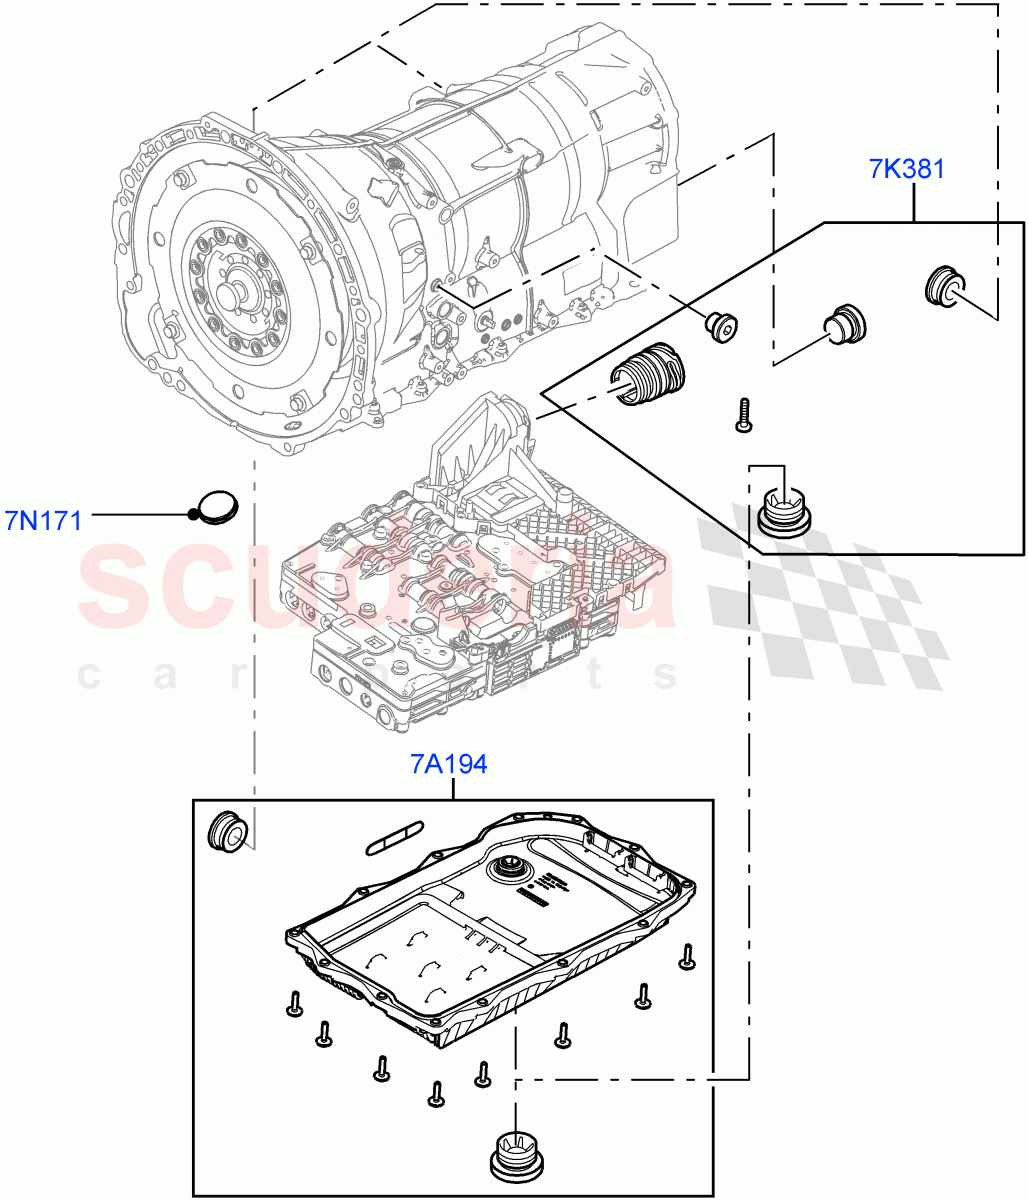 Transmission External Components(3.0L DOHC GDI SC V6 PETROL,8 Speed Auto Trans ZF 8HP70 4WD,3.0 V6 D Gen2 Twin Turbo) of Land Rover Land Rover Range Rover Velar (2017+) [2.0 Turbo Diesel AJ21D4]